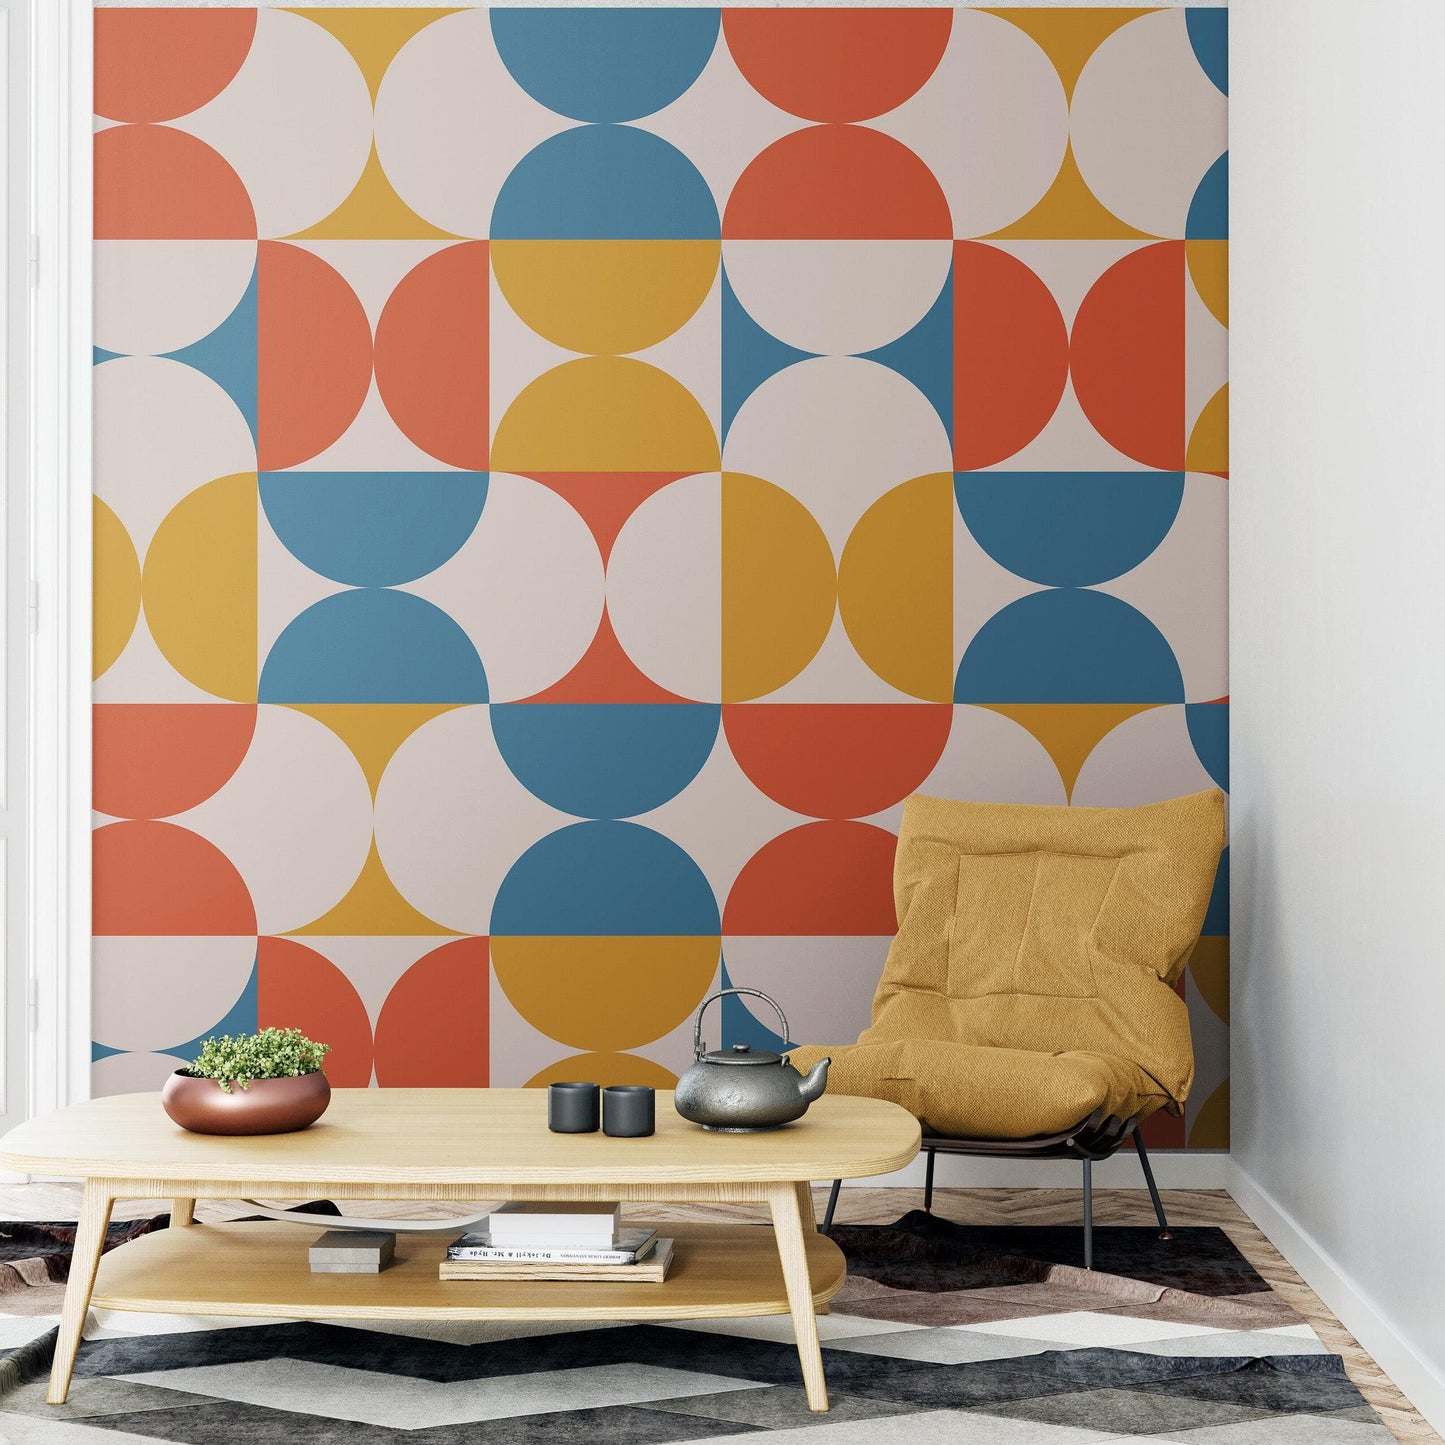 Retro Circle Geometric Wallpaper Peel and Stick Mural. Groovy Shape Patterns Mid Century Modern Retro Design. #6578